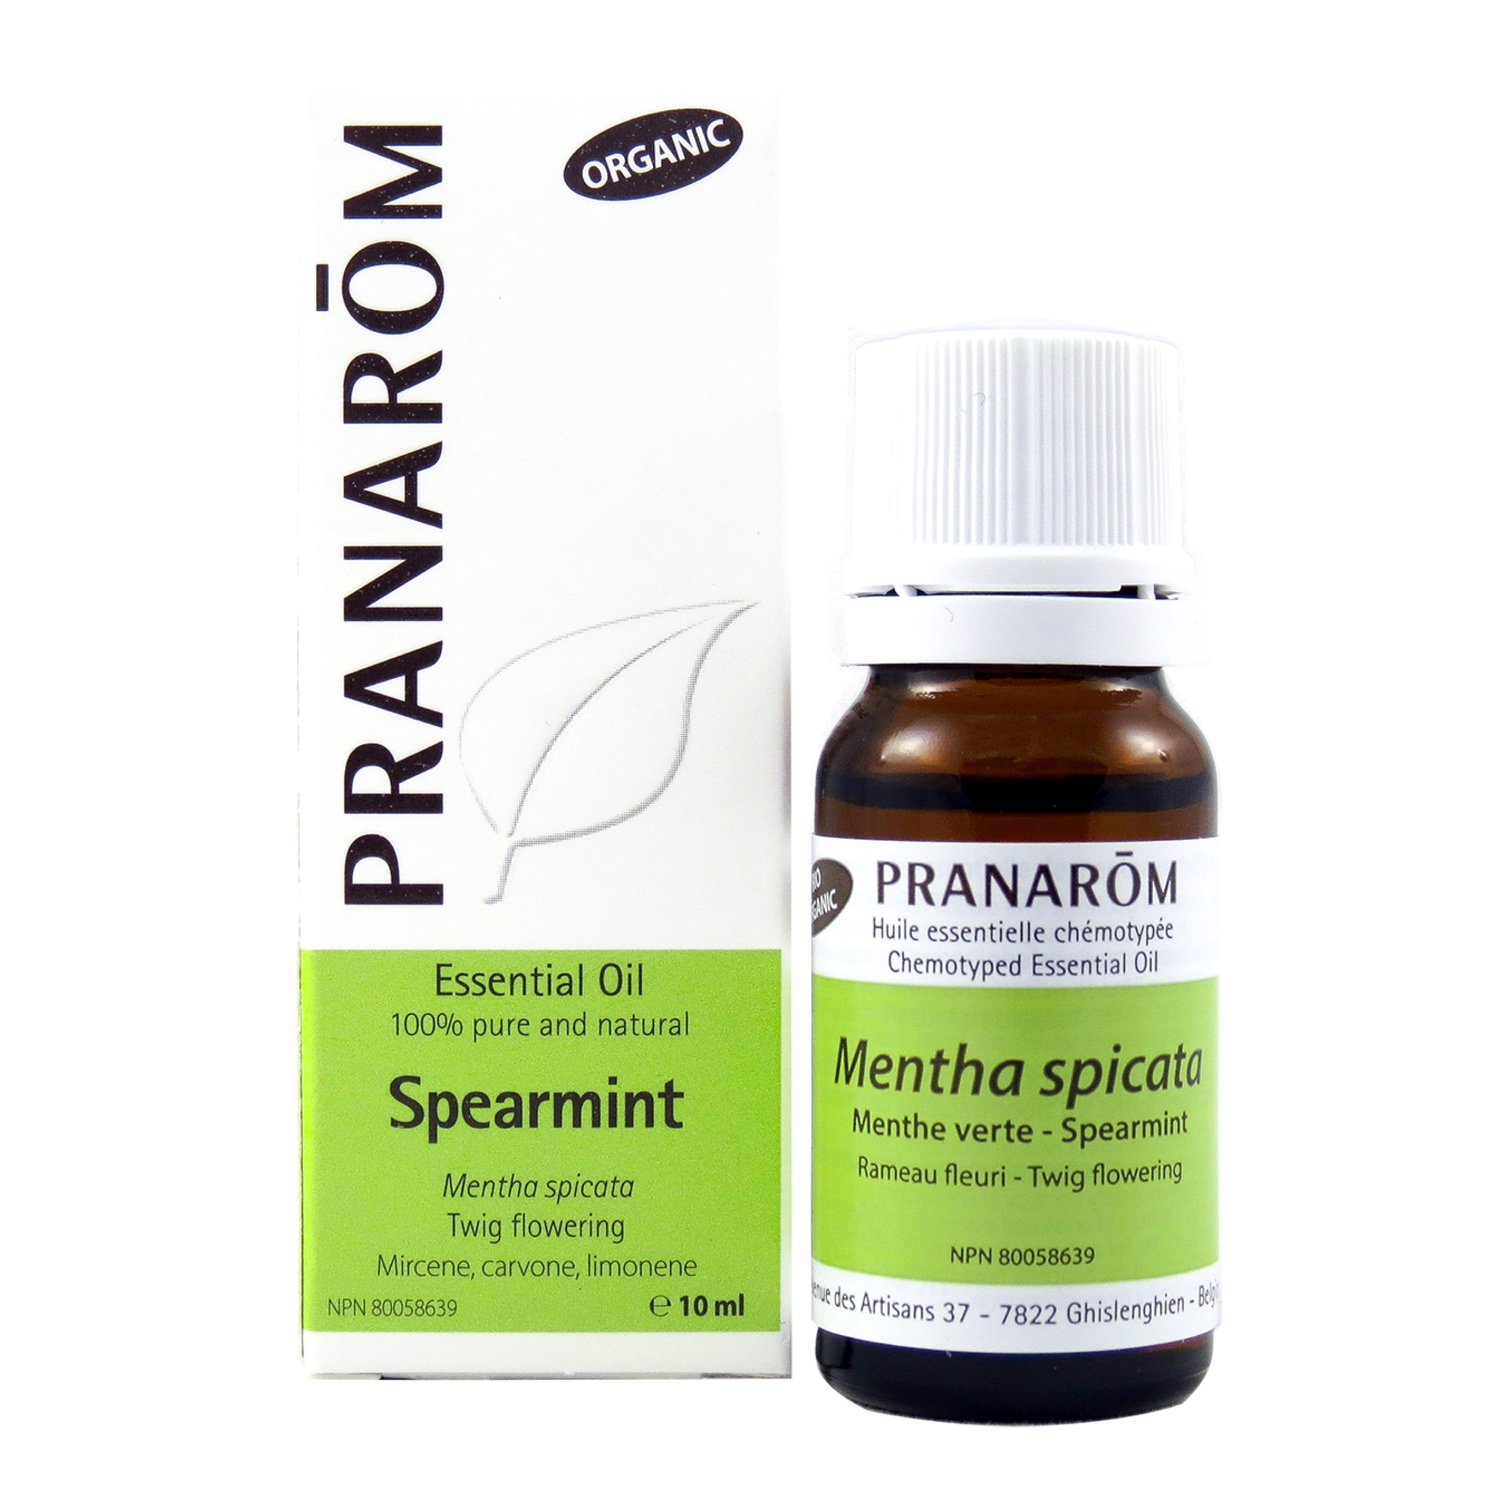 Pranarom Peppermint Essential Oil, 15mL, Pure, Aromatherapy